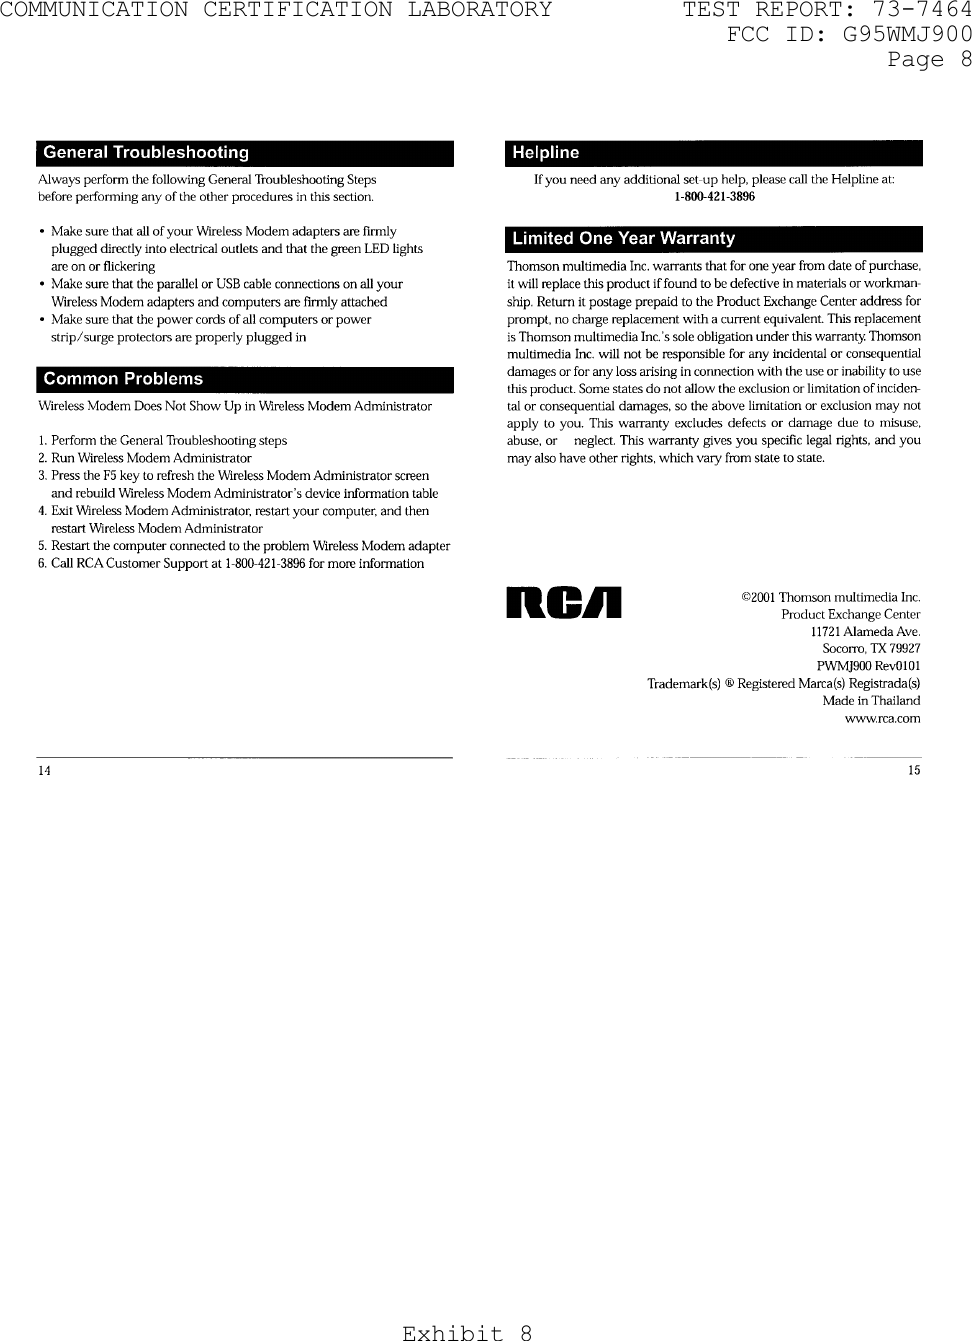 COMMUNICATION CERTIFICATION LABORATORY  TEST REPORT: 73-7464     FCC ID: G95WMJ900   Page 8 Exhibit 8    